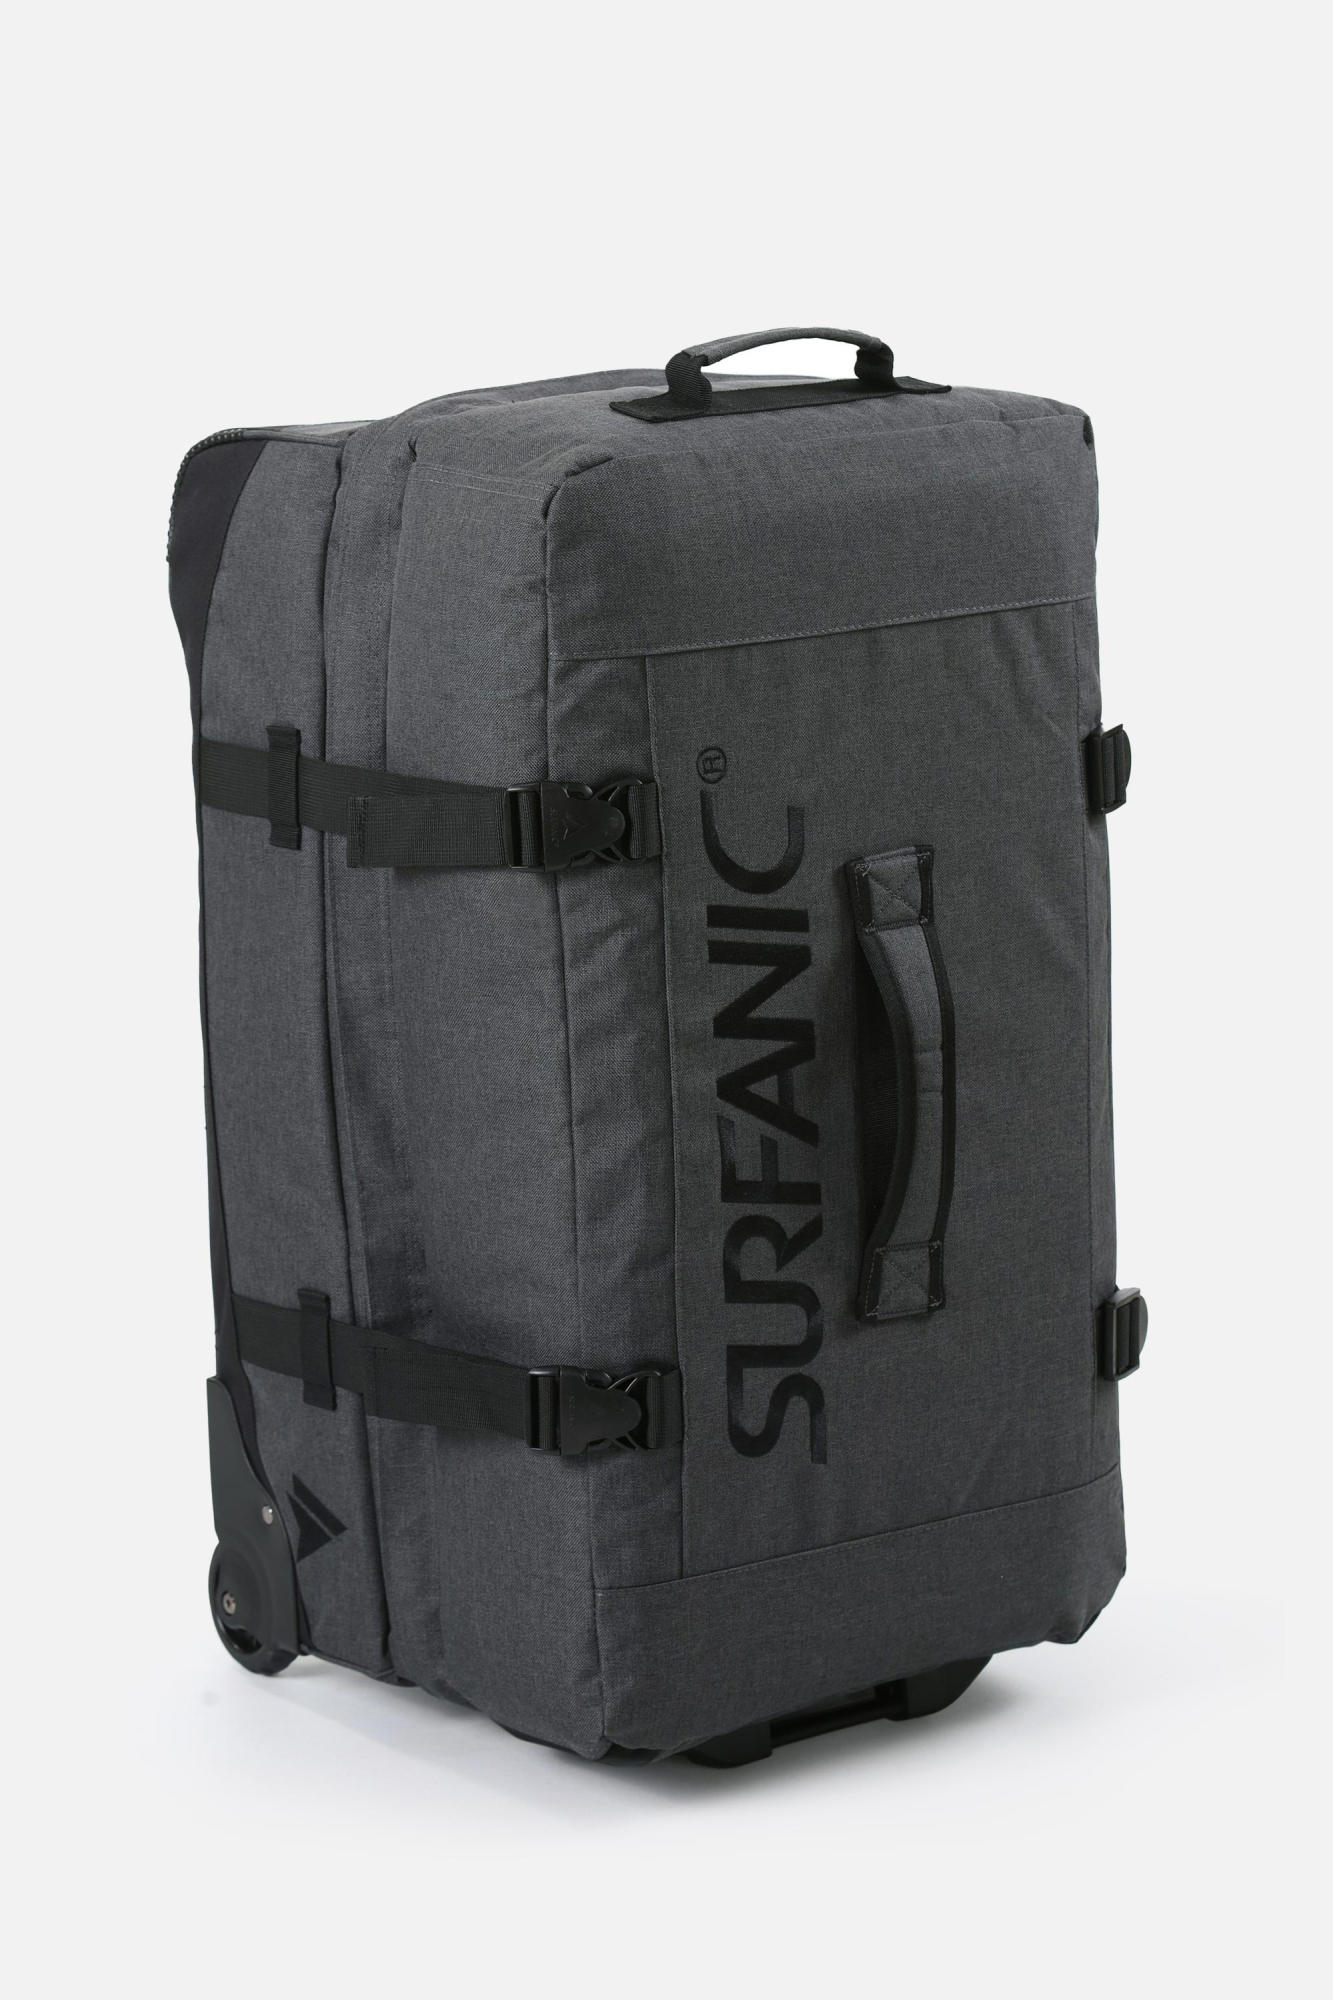 Surfanic Unisex Maxim 100 Roller Bag Grey - Size: 100 Litre